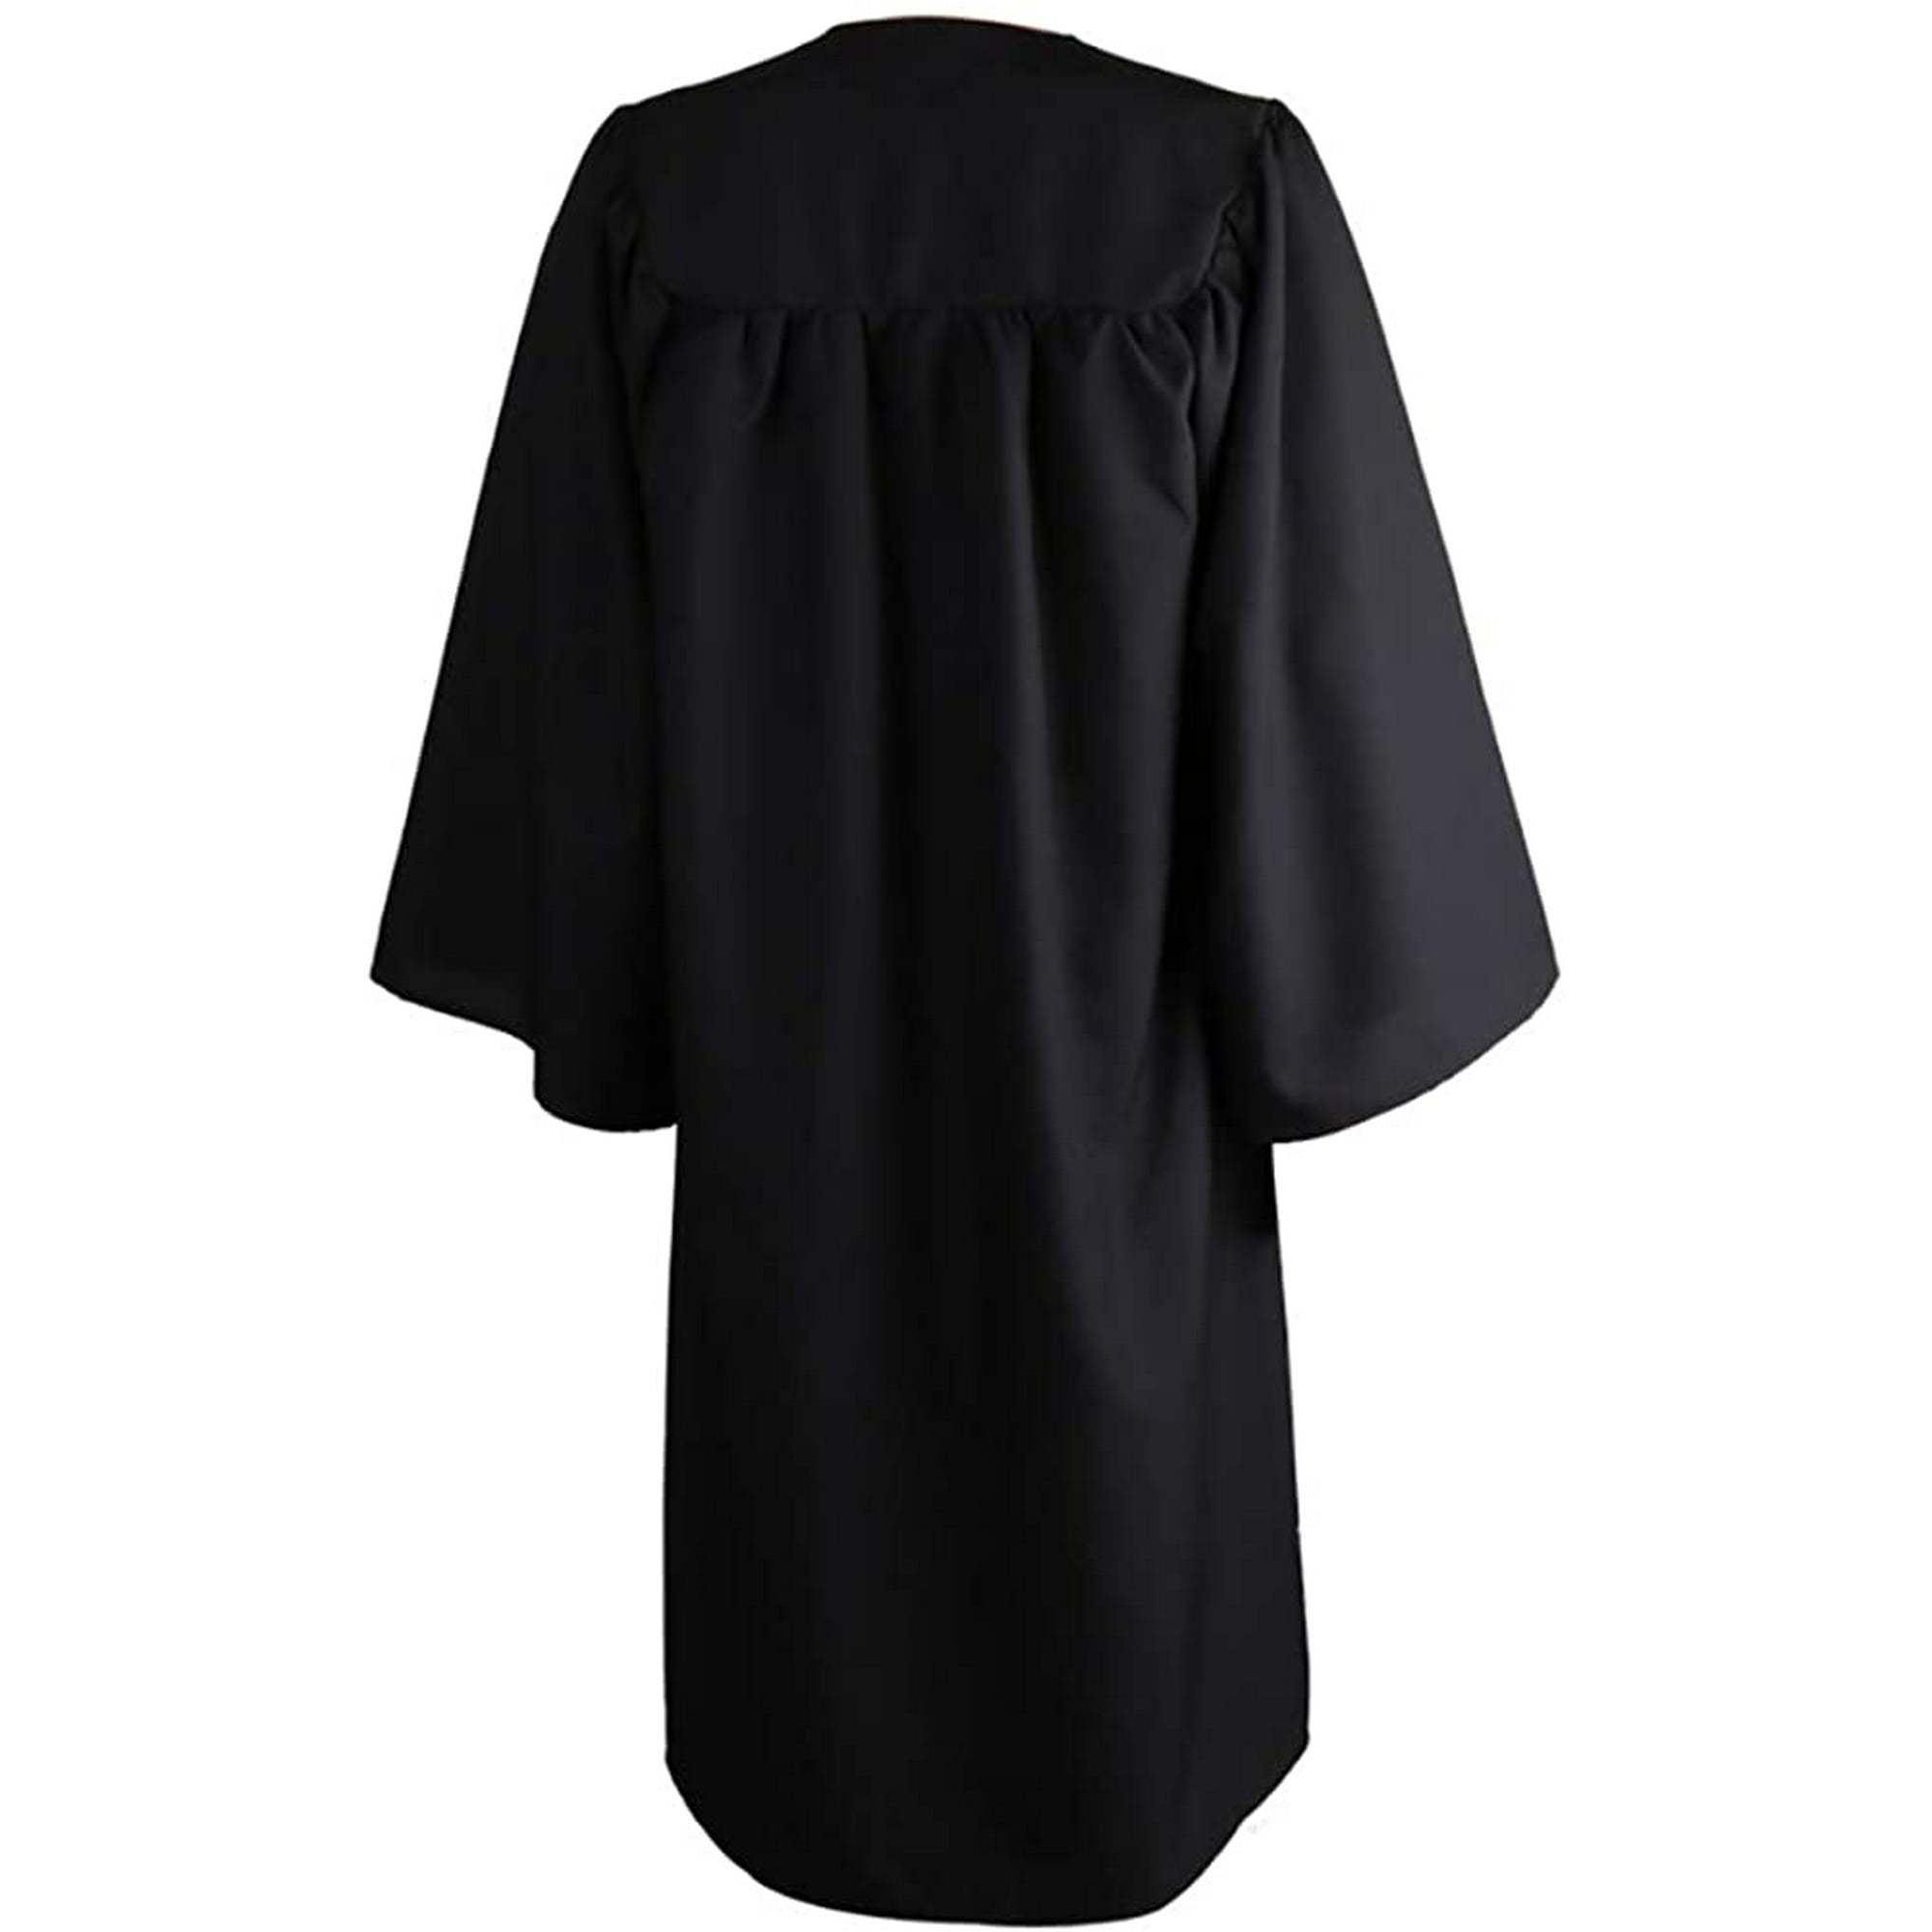 KQ_ 2020 Unisex Adults University Academic Zip Graduation Gown Robe Mortarboard